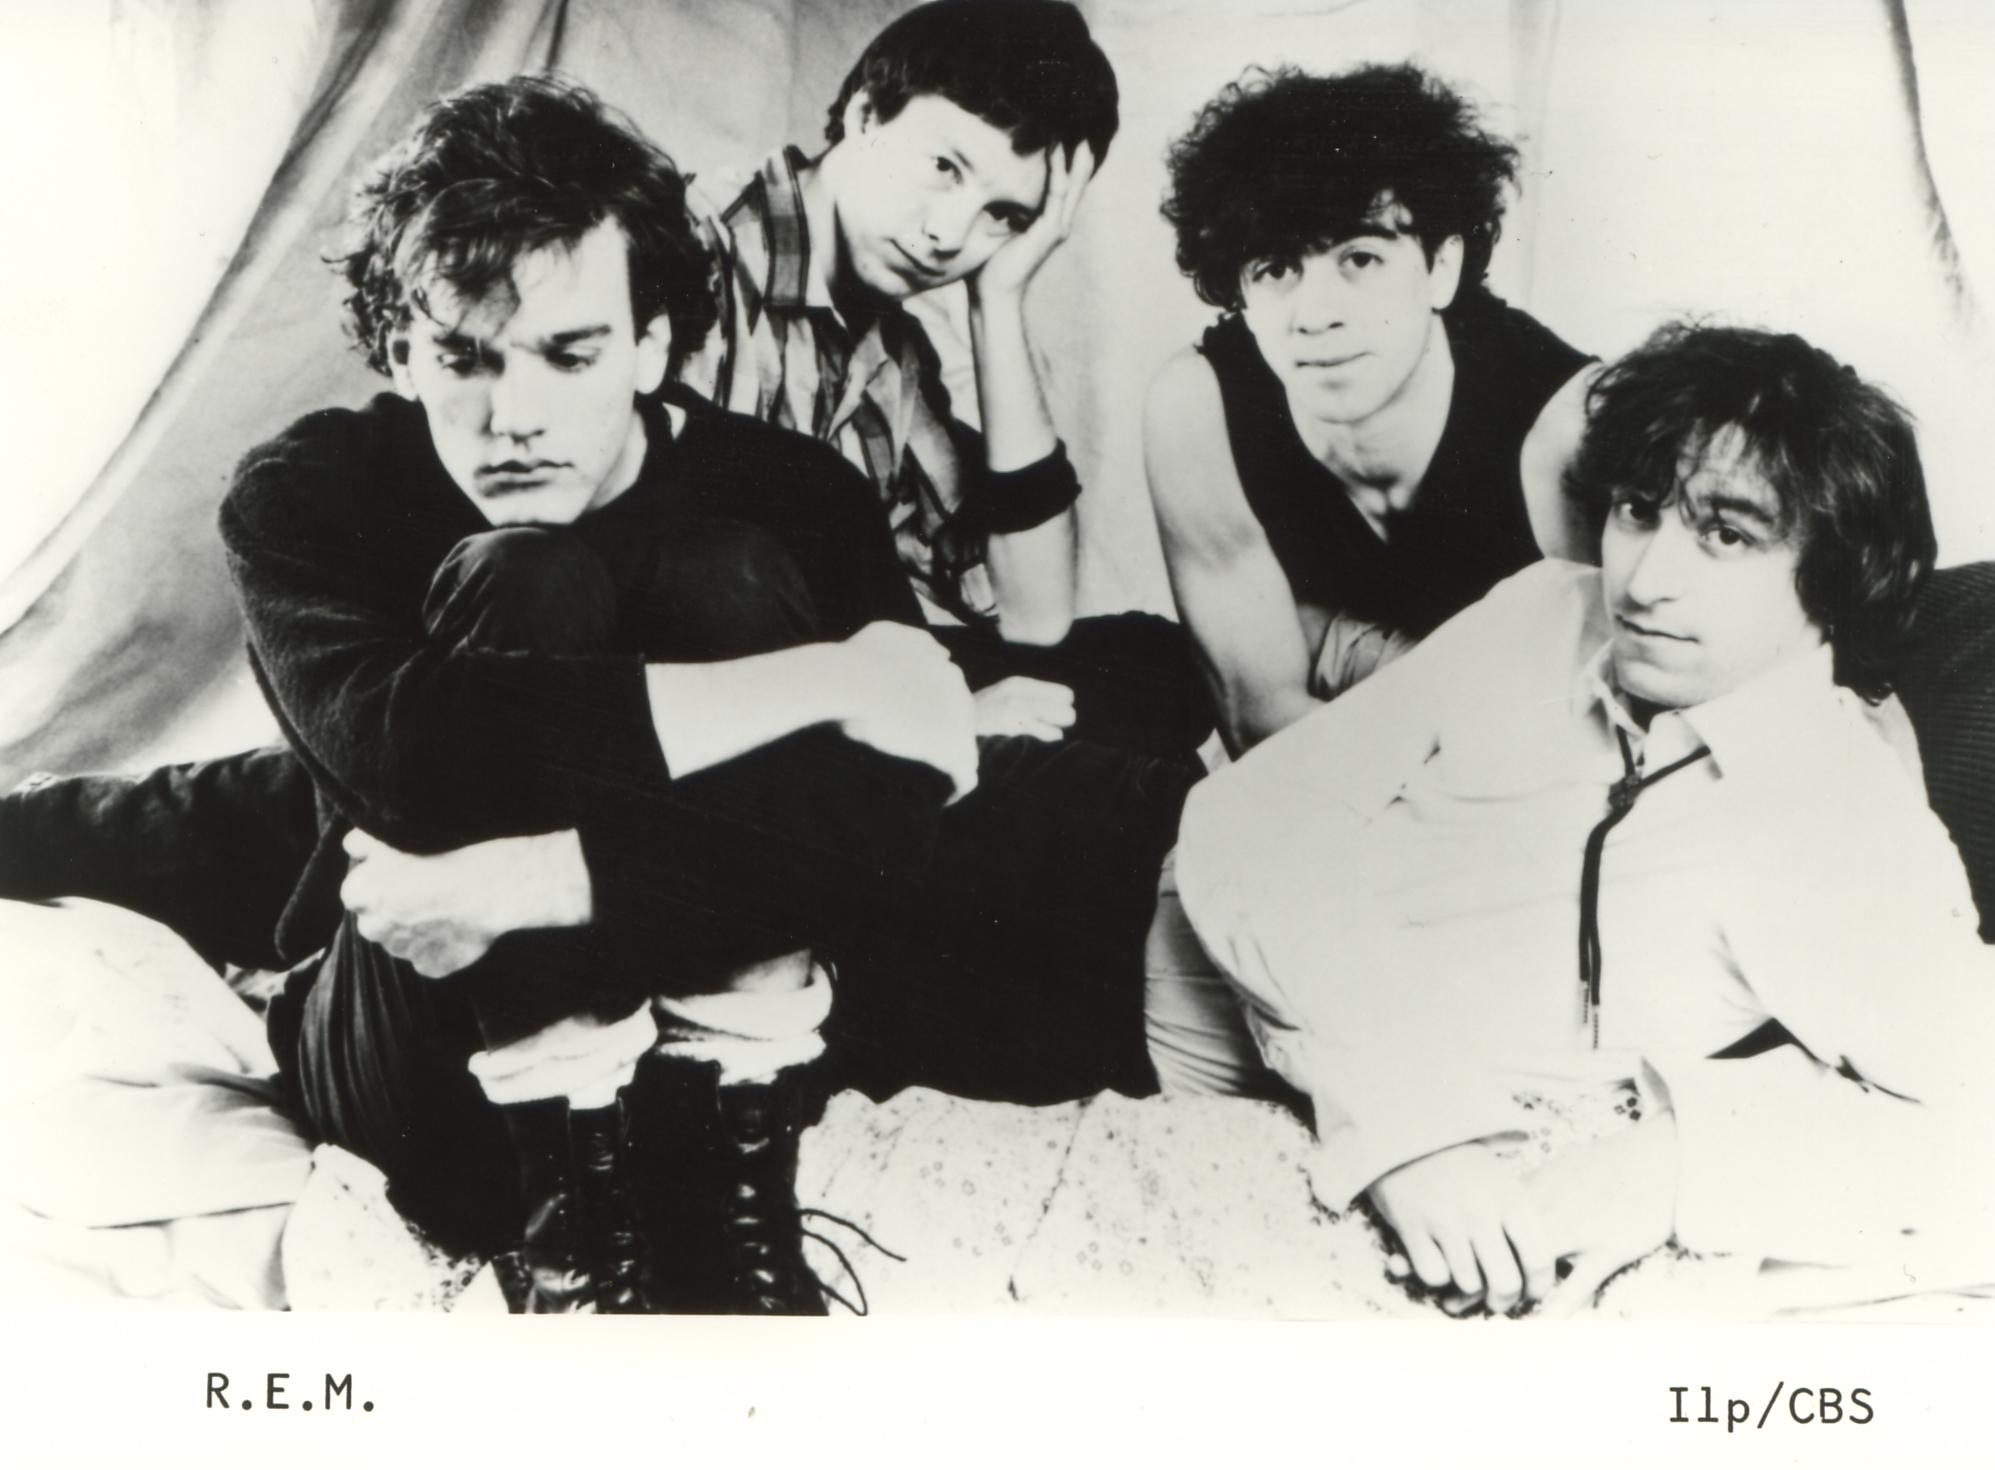 R.E.M.'s Early Pop Had a Lasting Impact on Nirvana